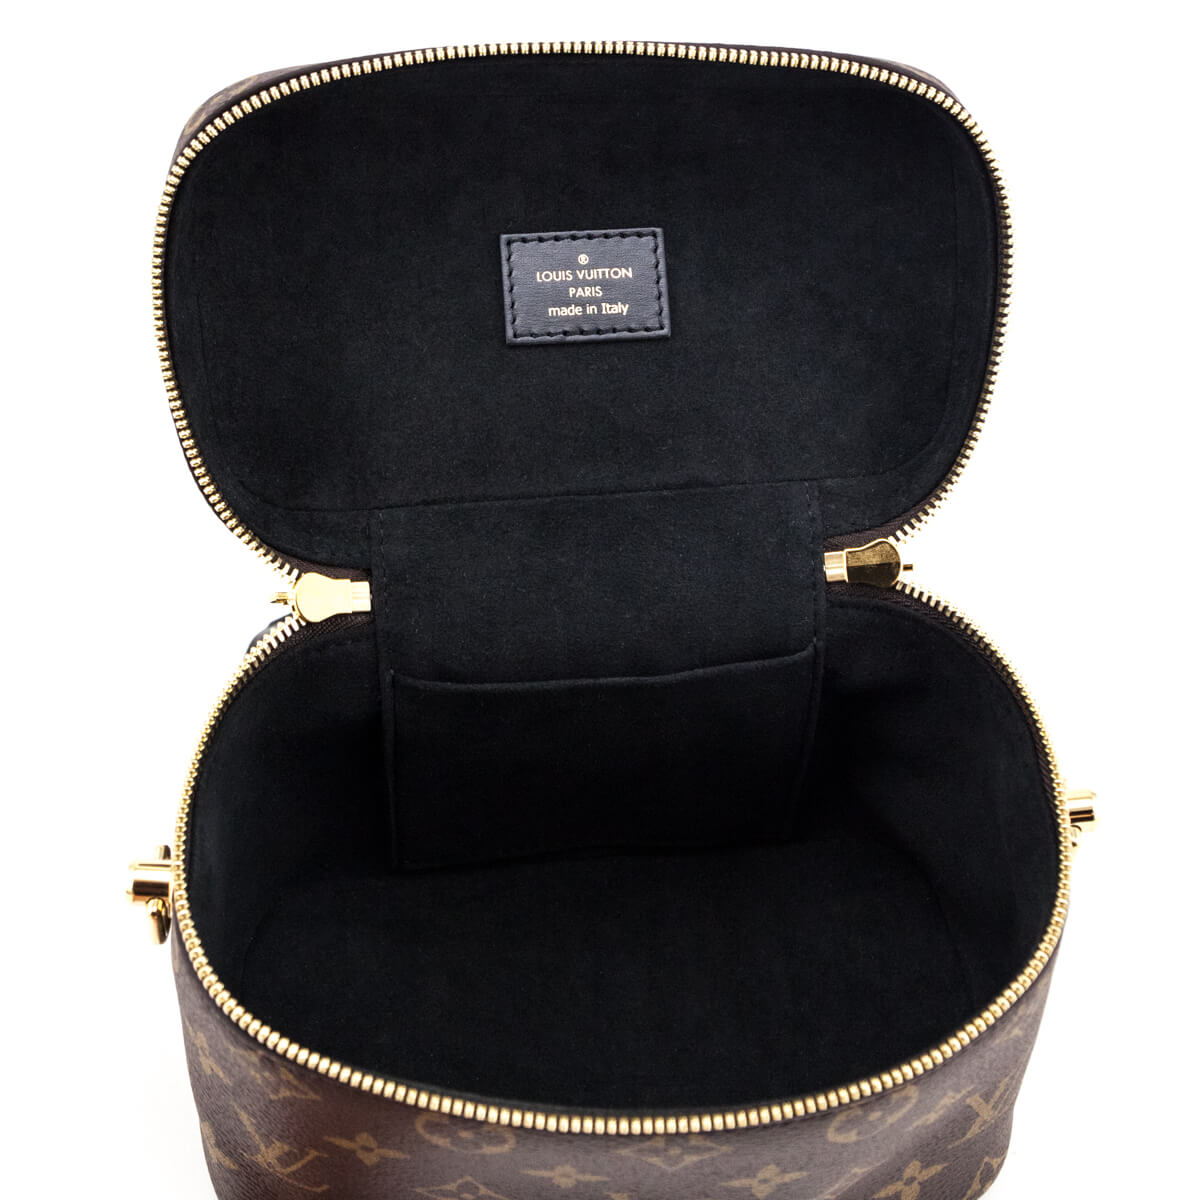 Second hand LV Vanity Case bag - 100% Genuine leather